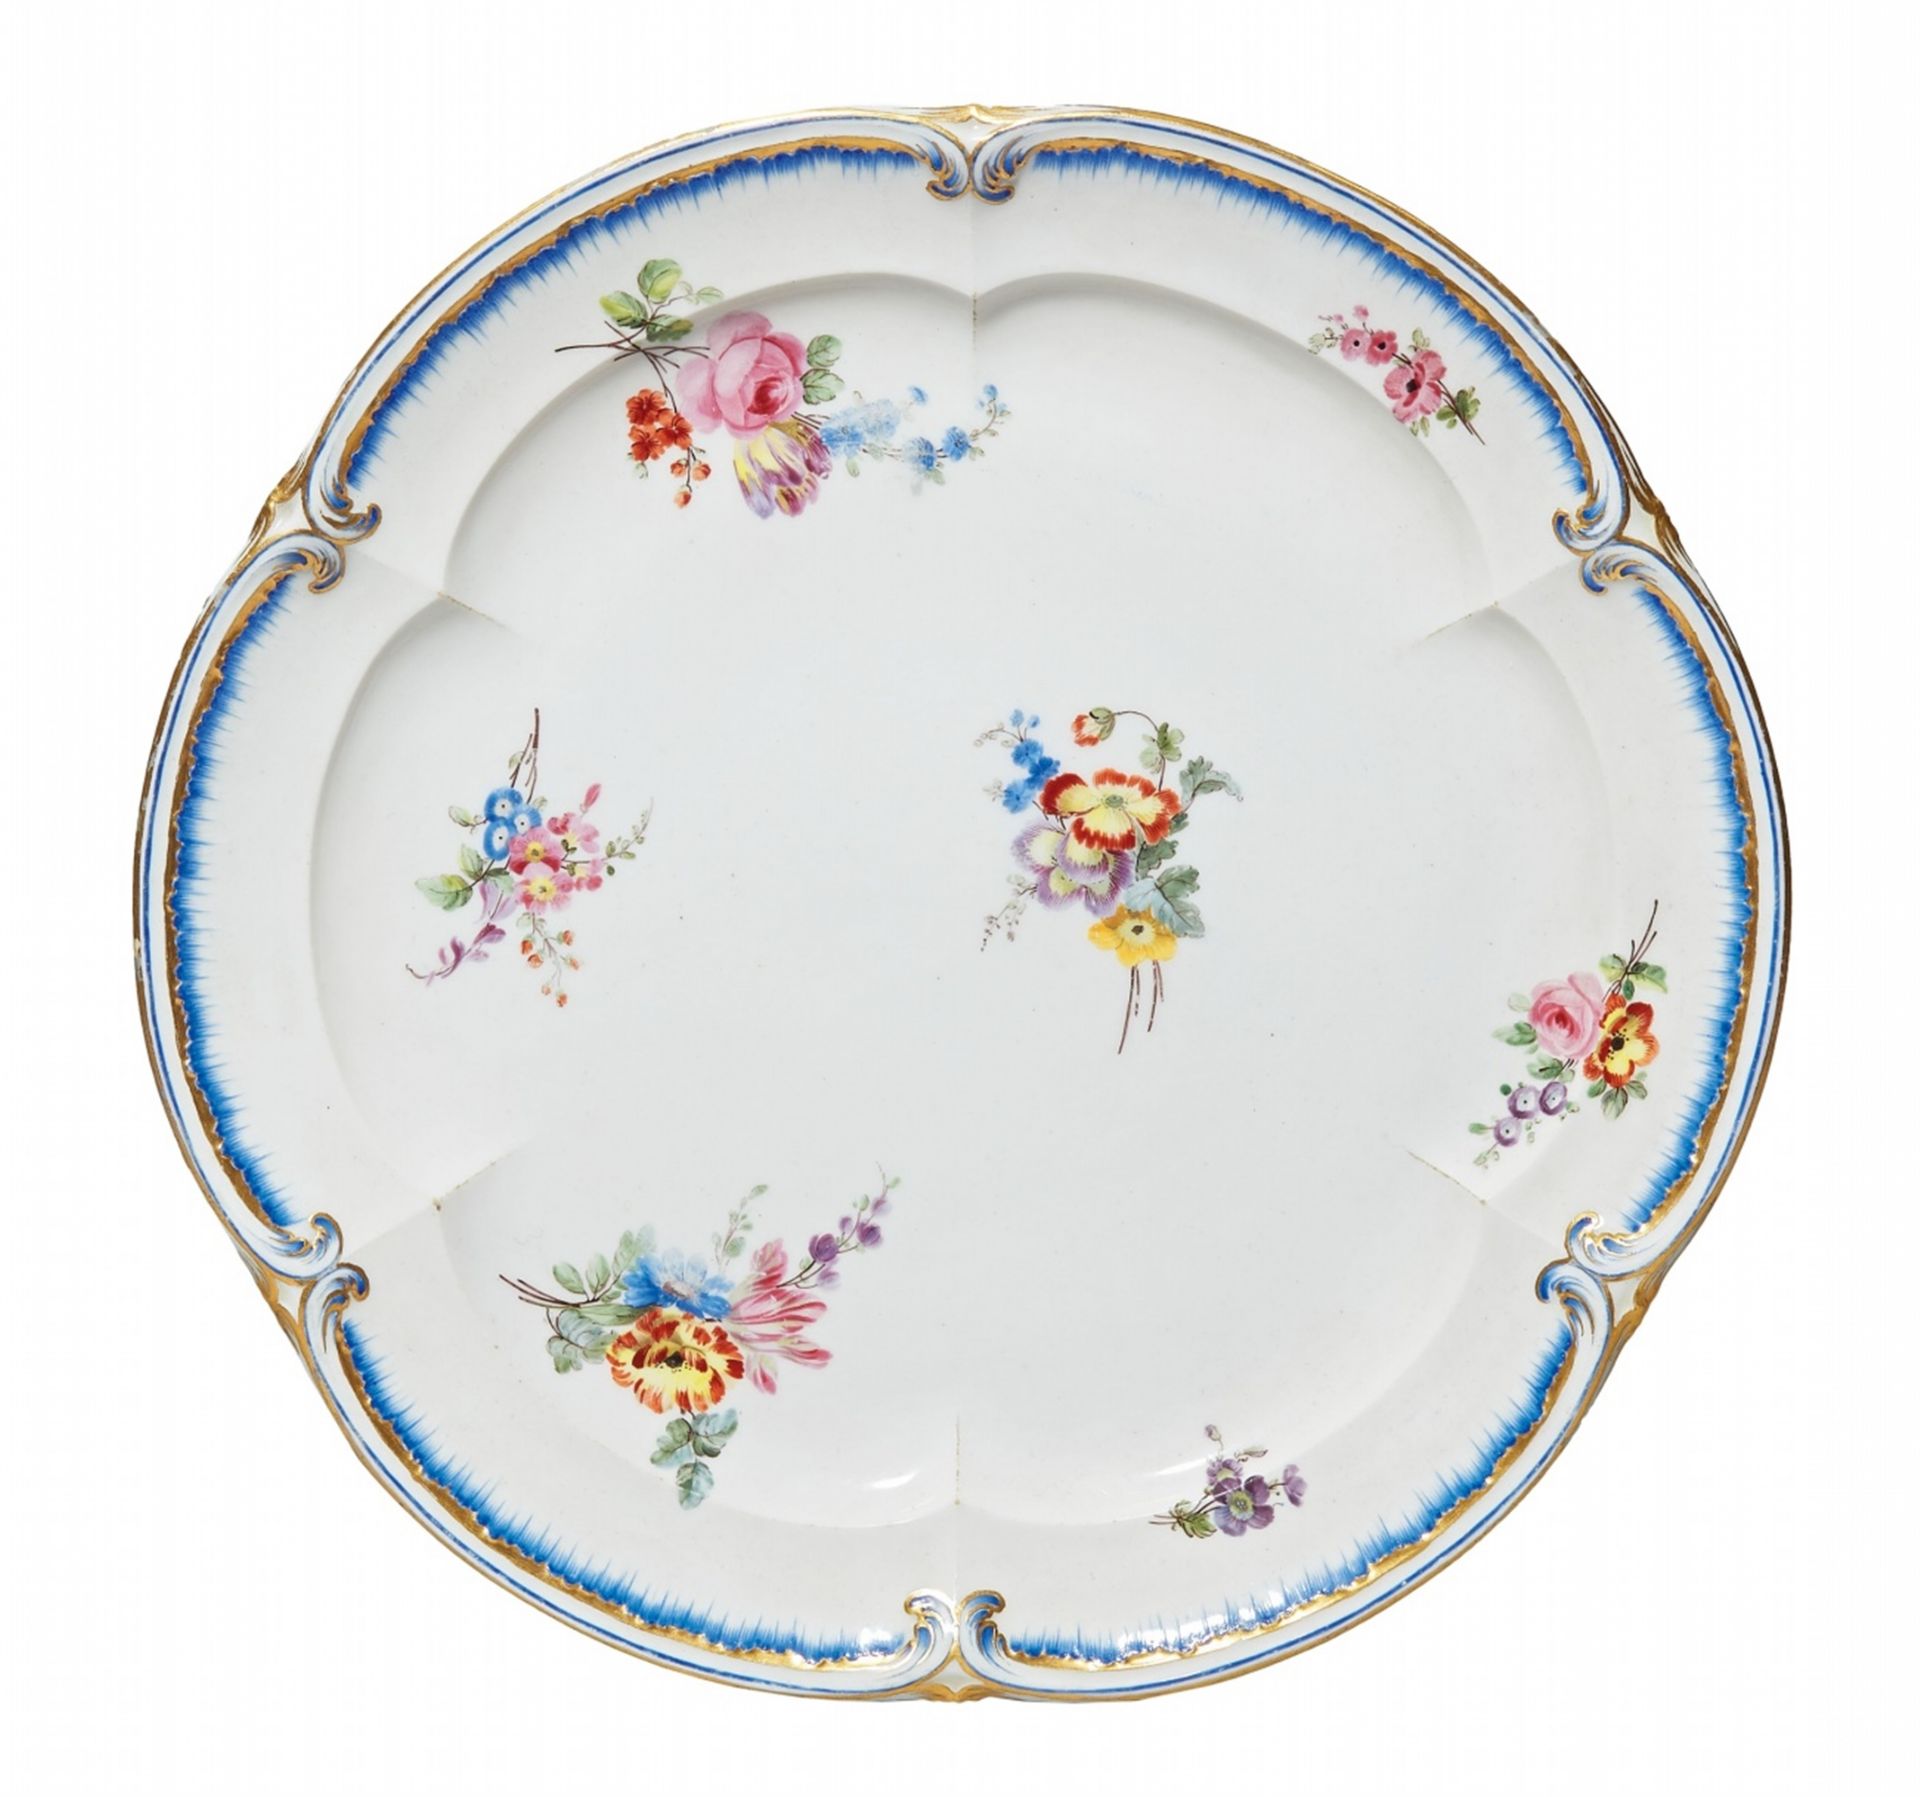 A Sèvres soft-paste porcelain platter from a service with bouquets